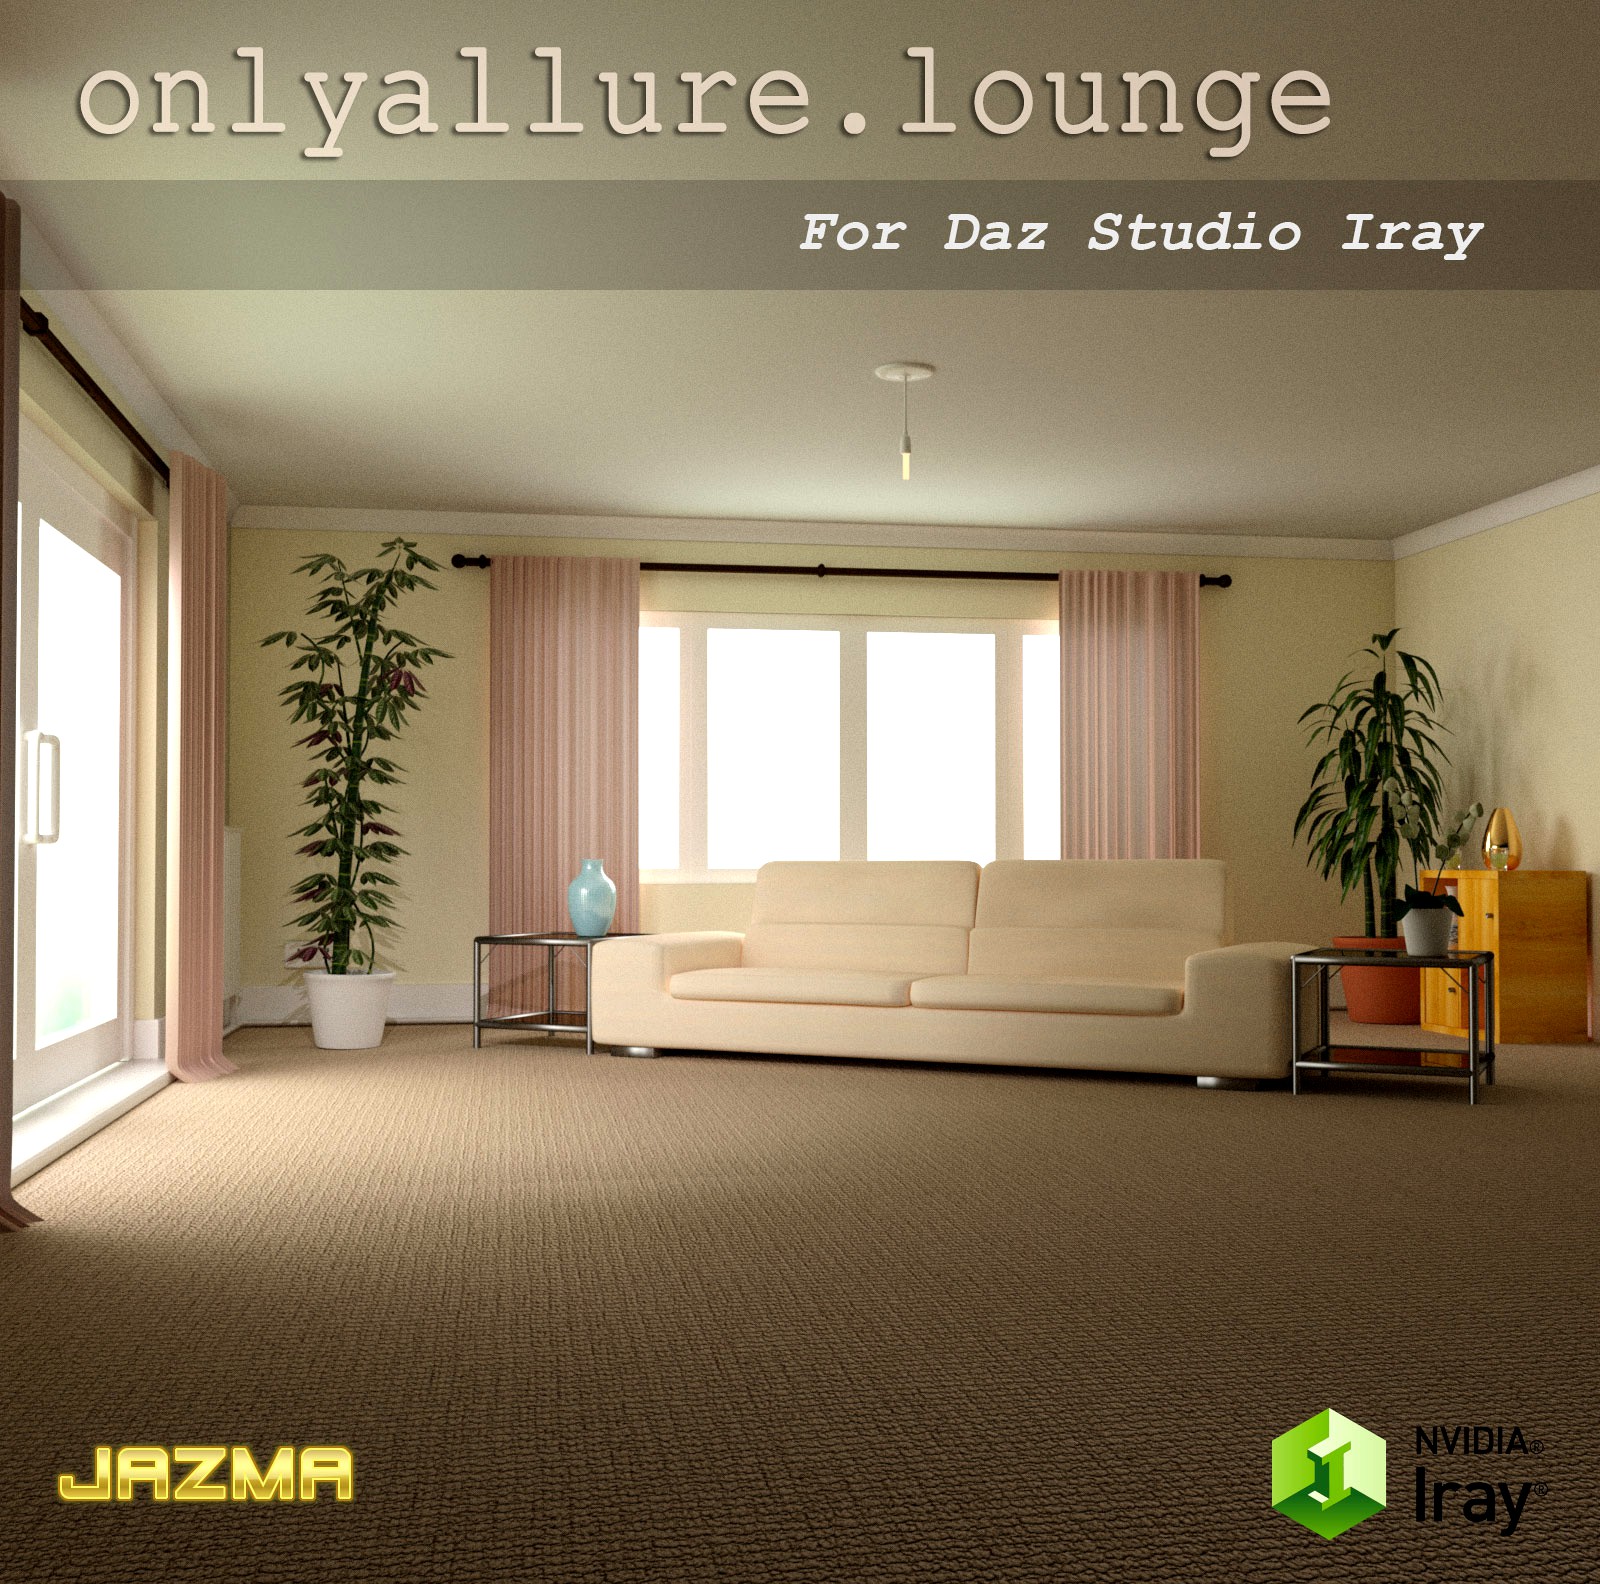 onlyallure lounge